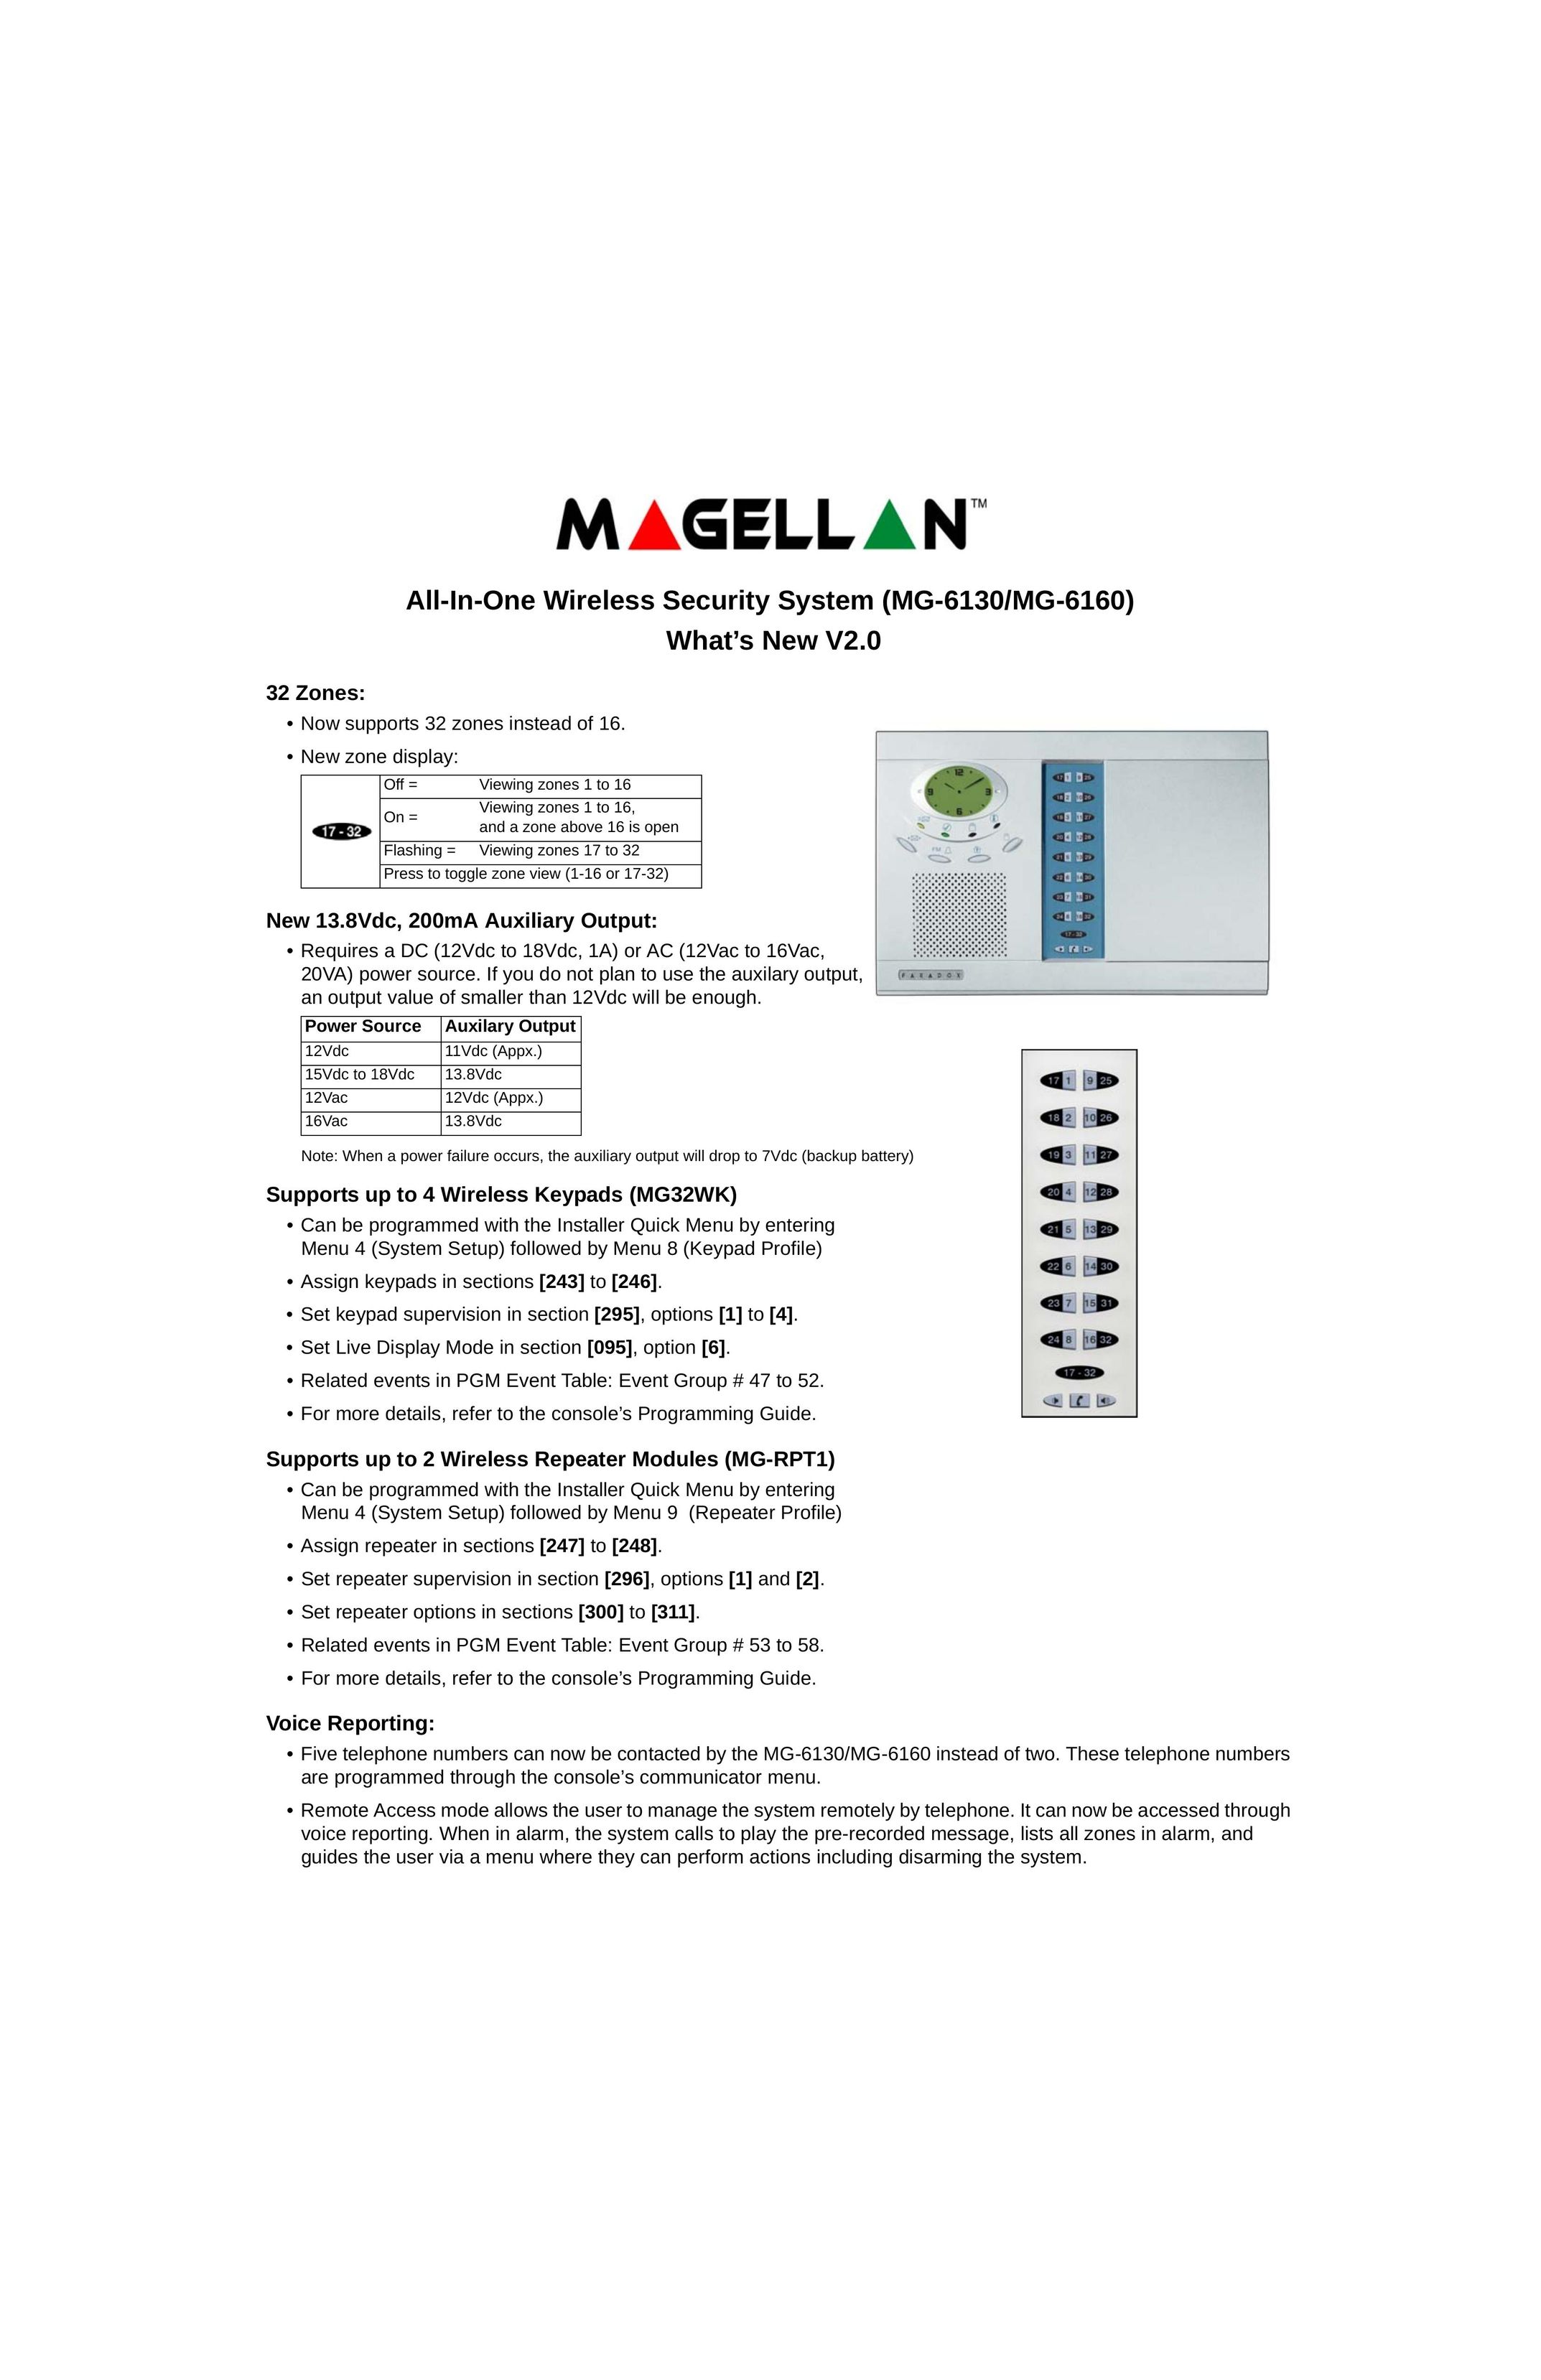 Magellan MG-6160 Home Security System User Manual